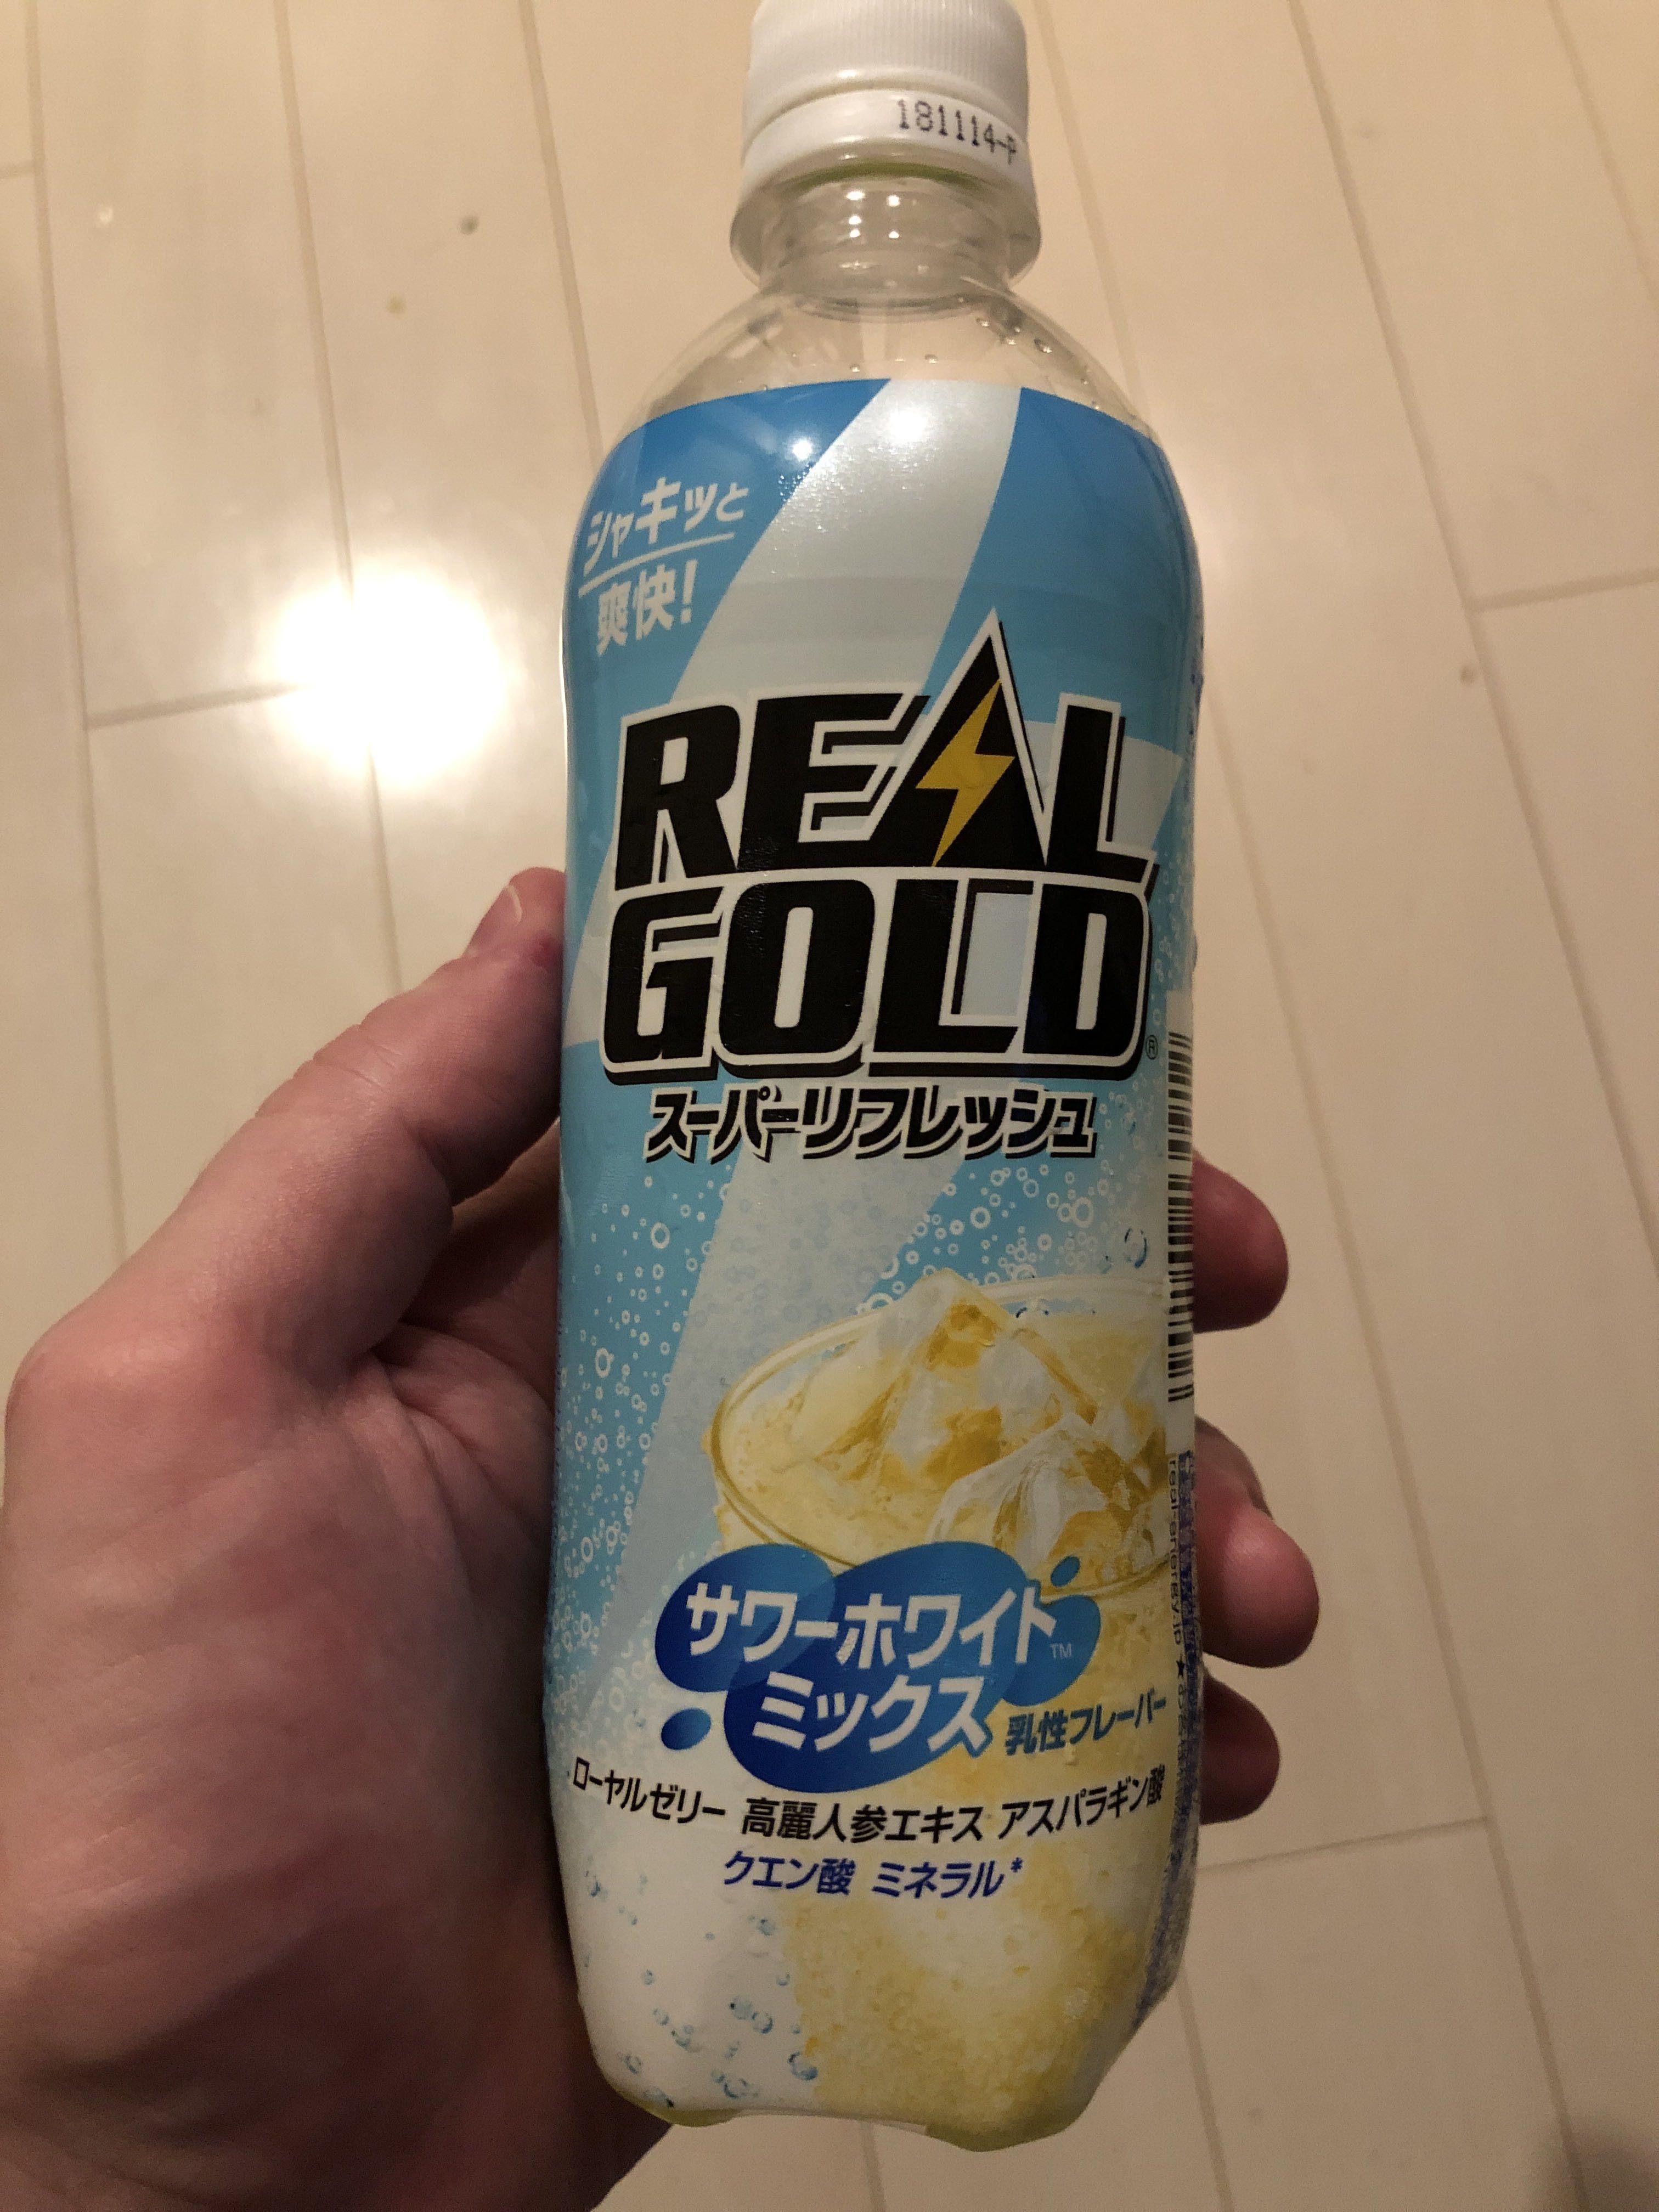 Real Gold - 製品 - fr